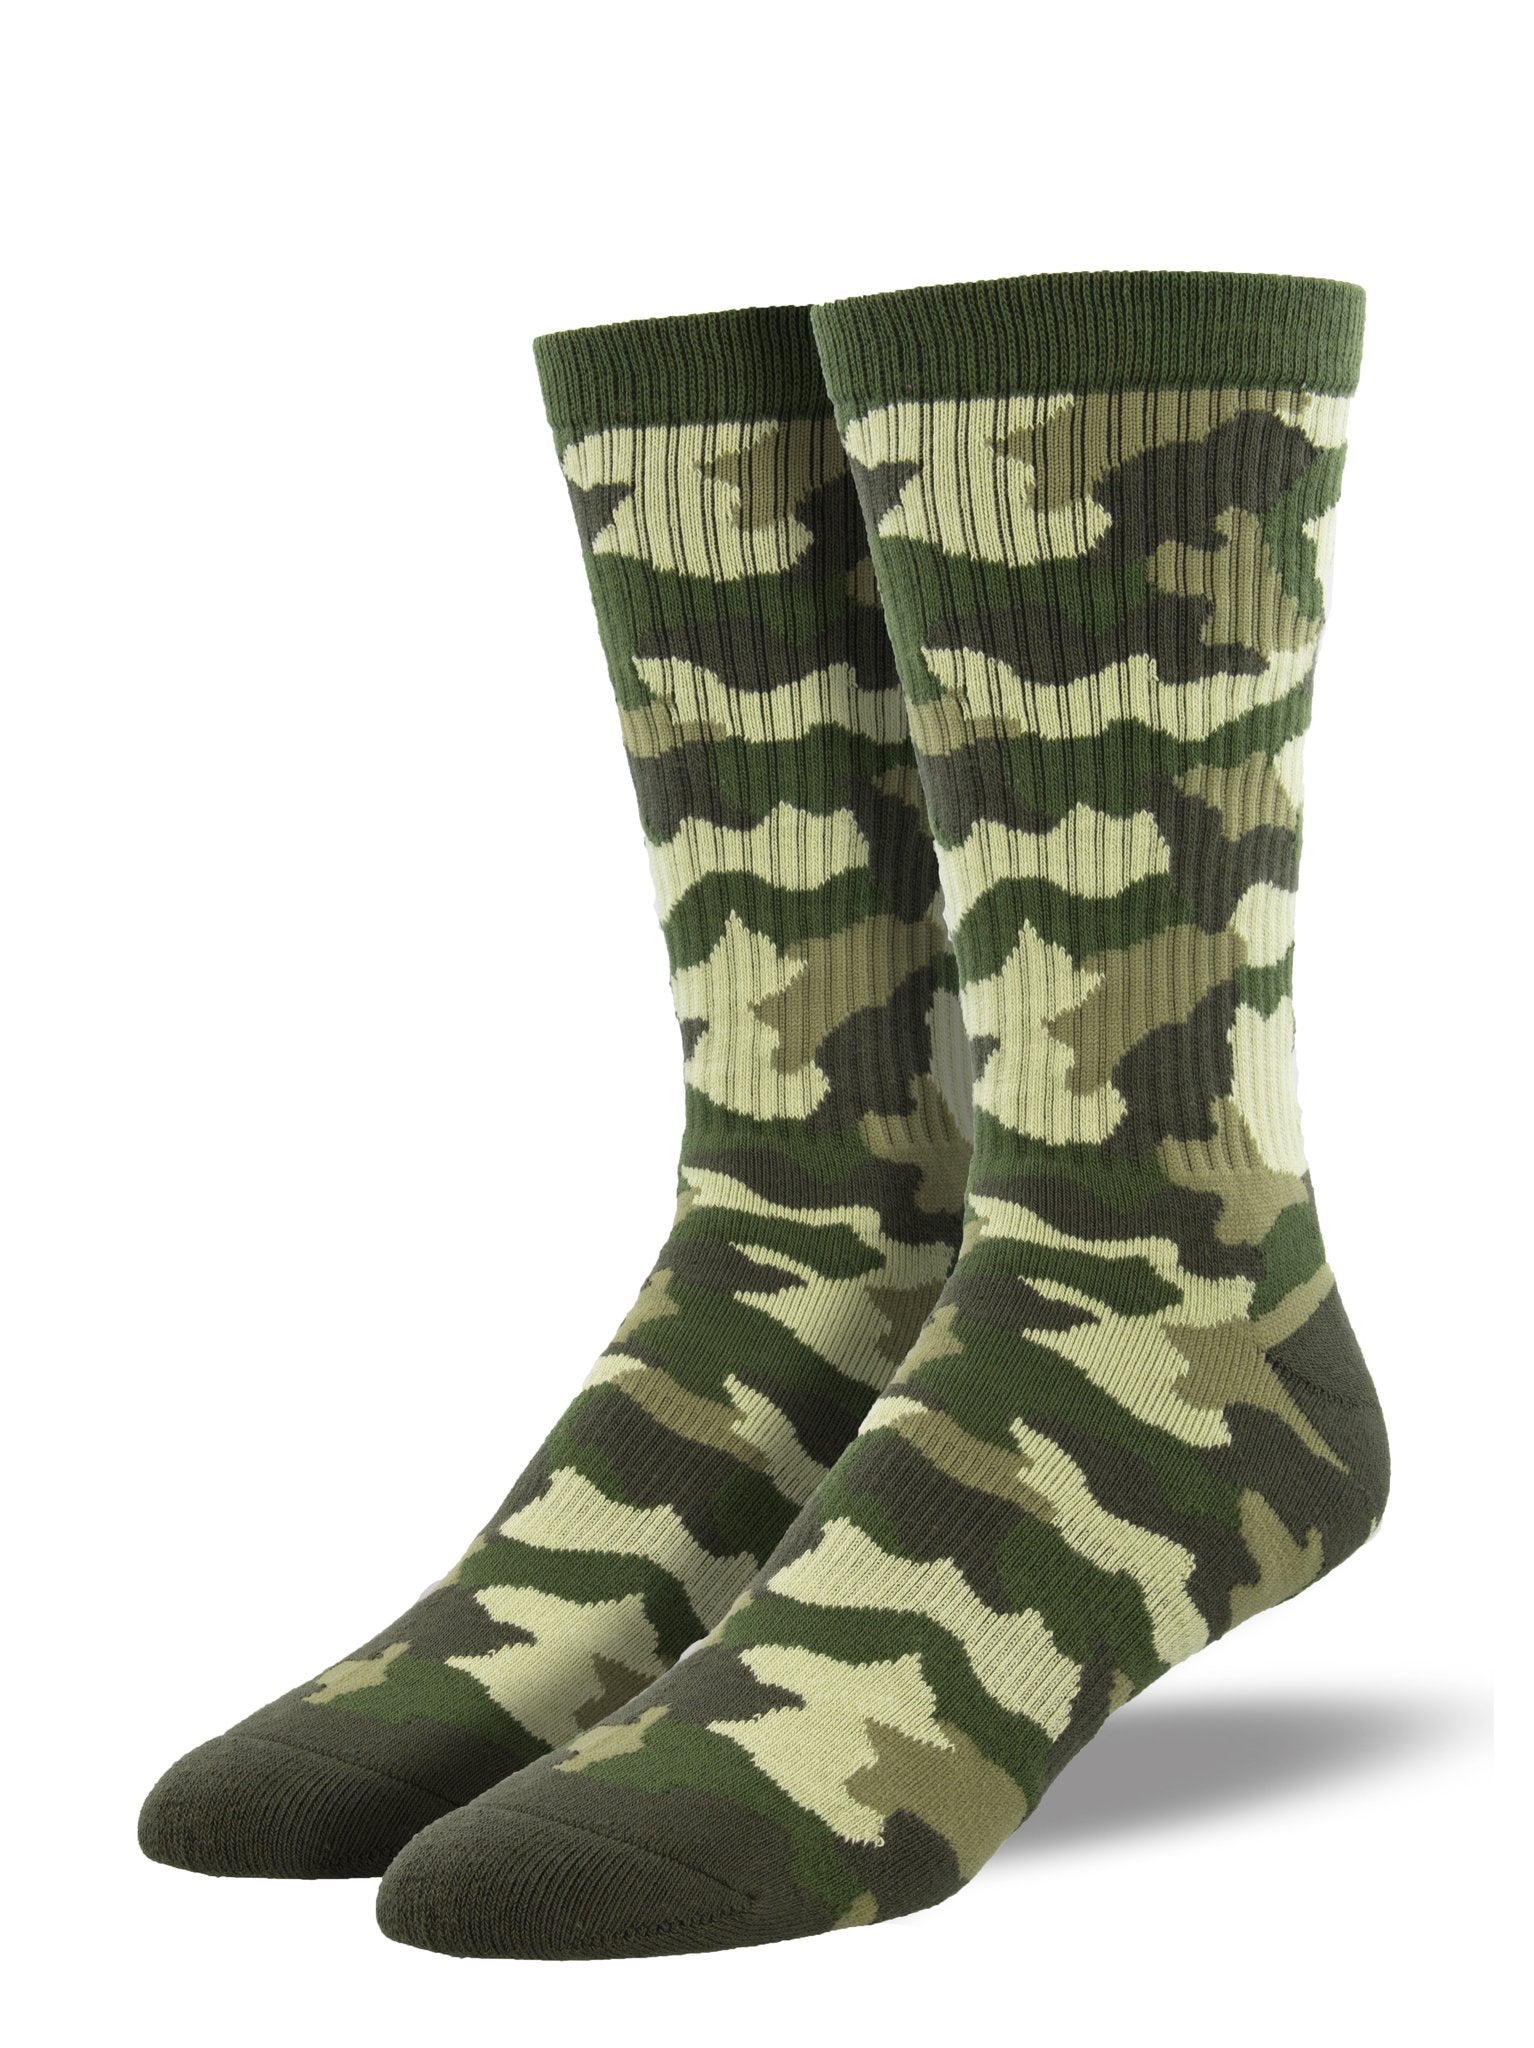 Green Camo Athletic Socks